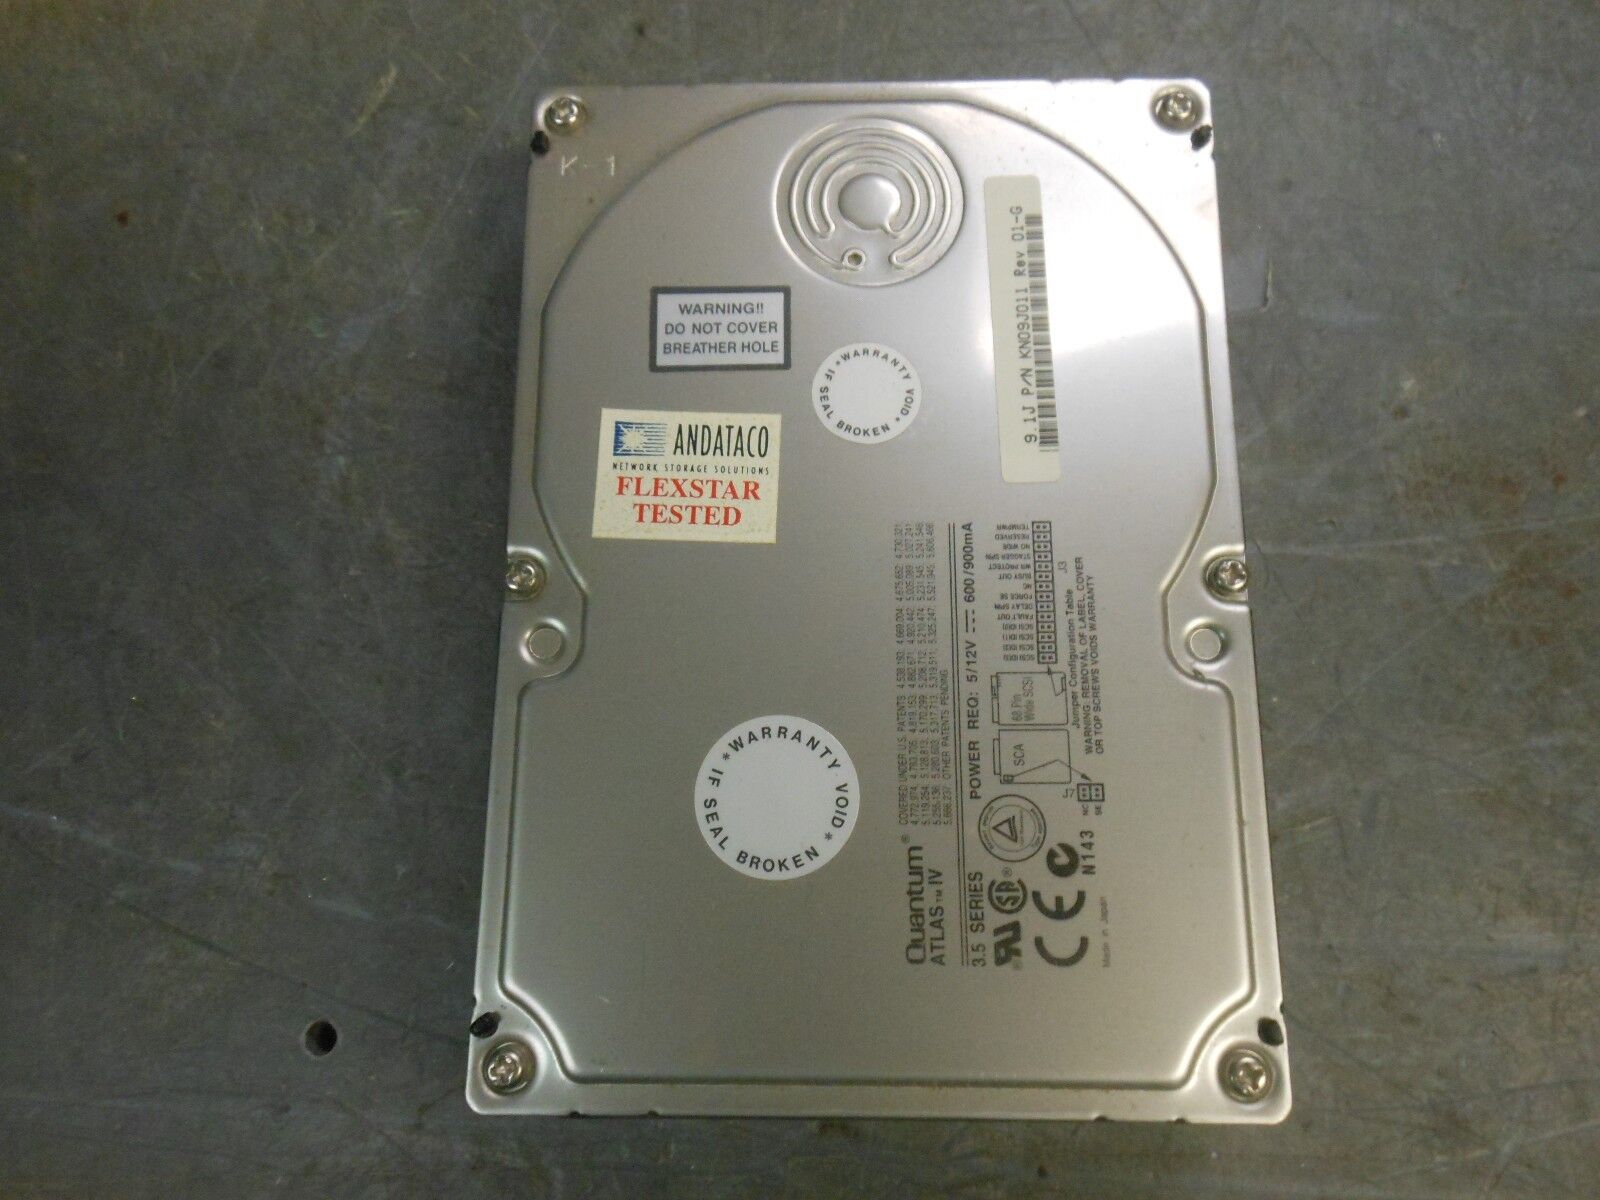 HP Quantum Atlas IV 9.1GB KN09J011 Rev 01-G U160 SCA hard drive Andataco